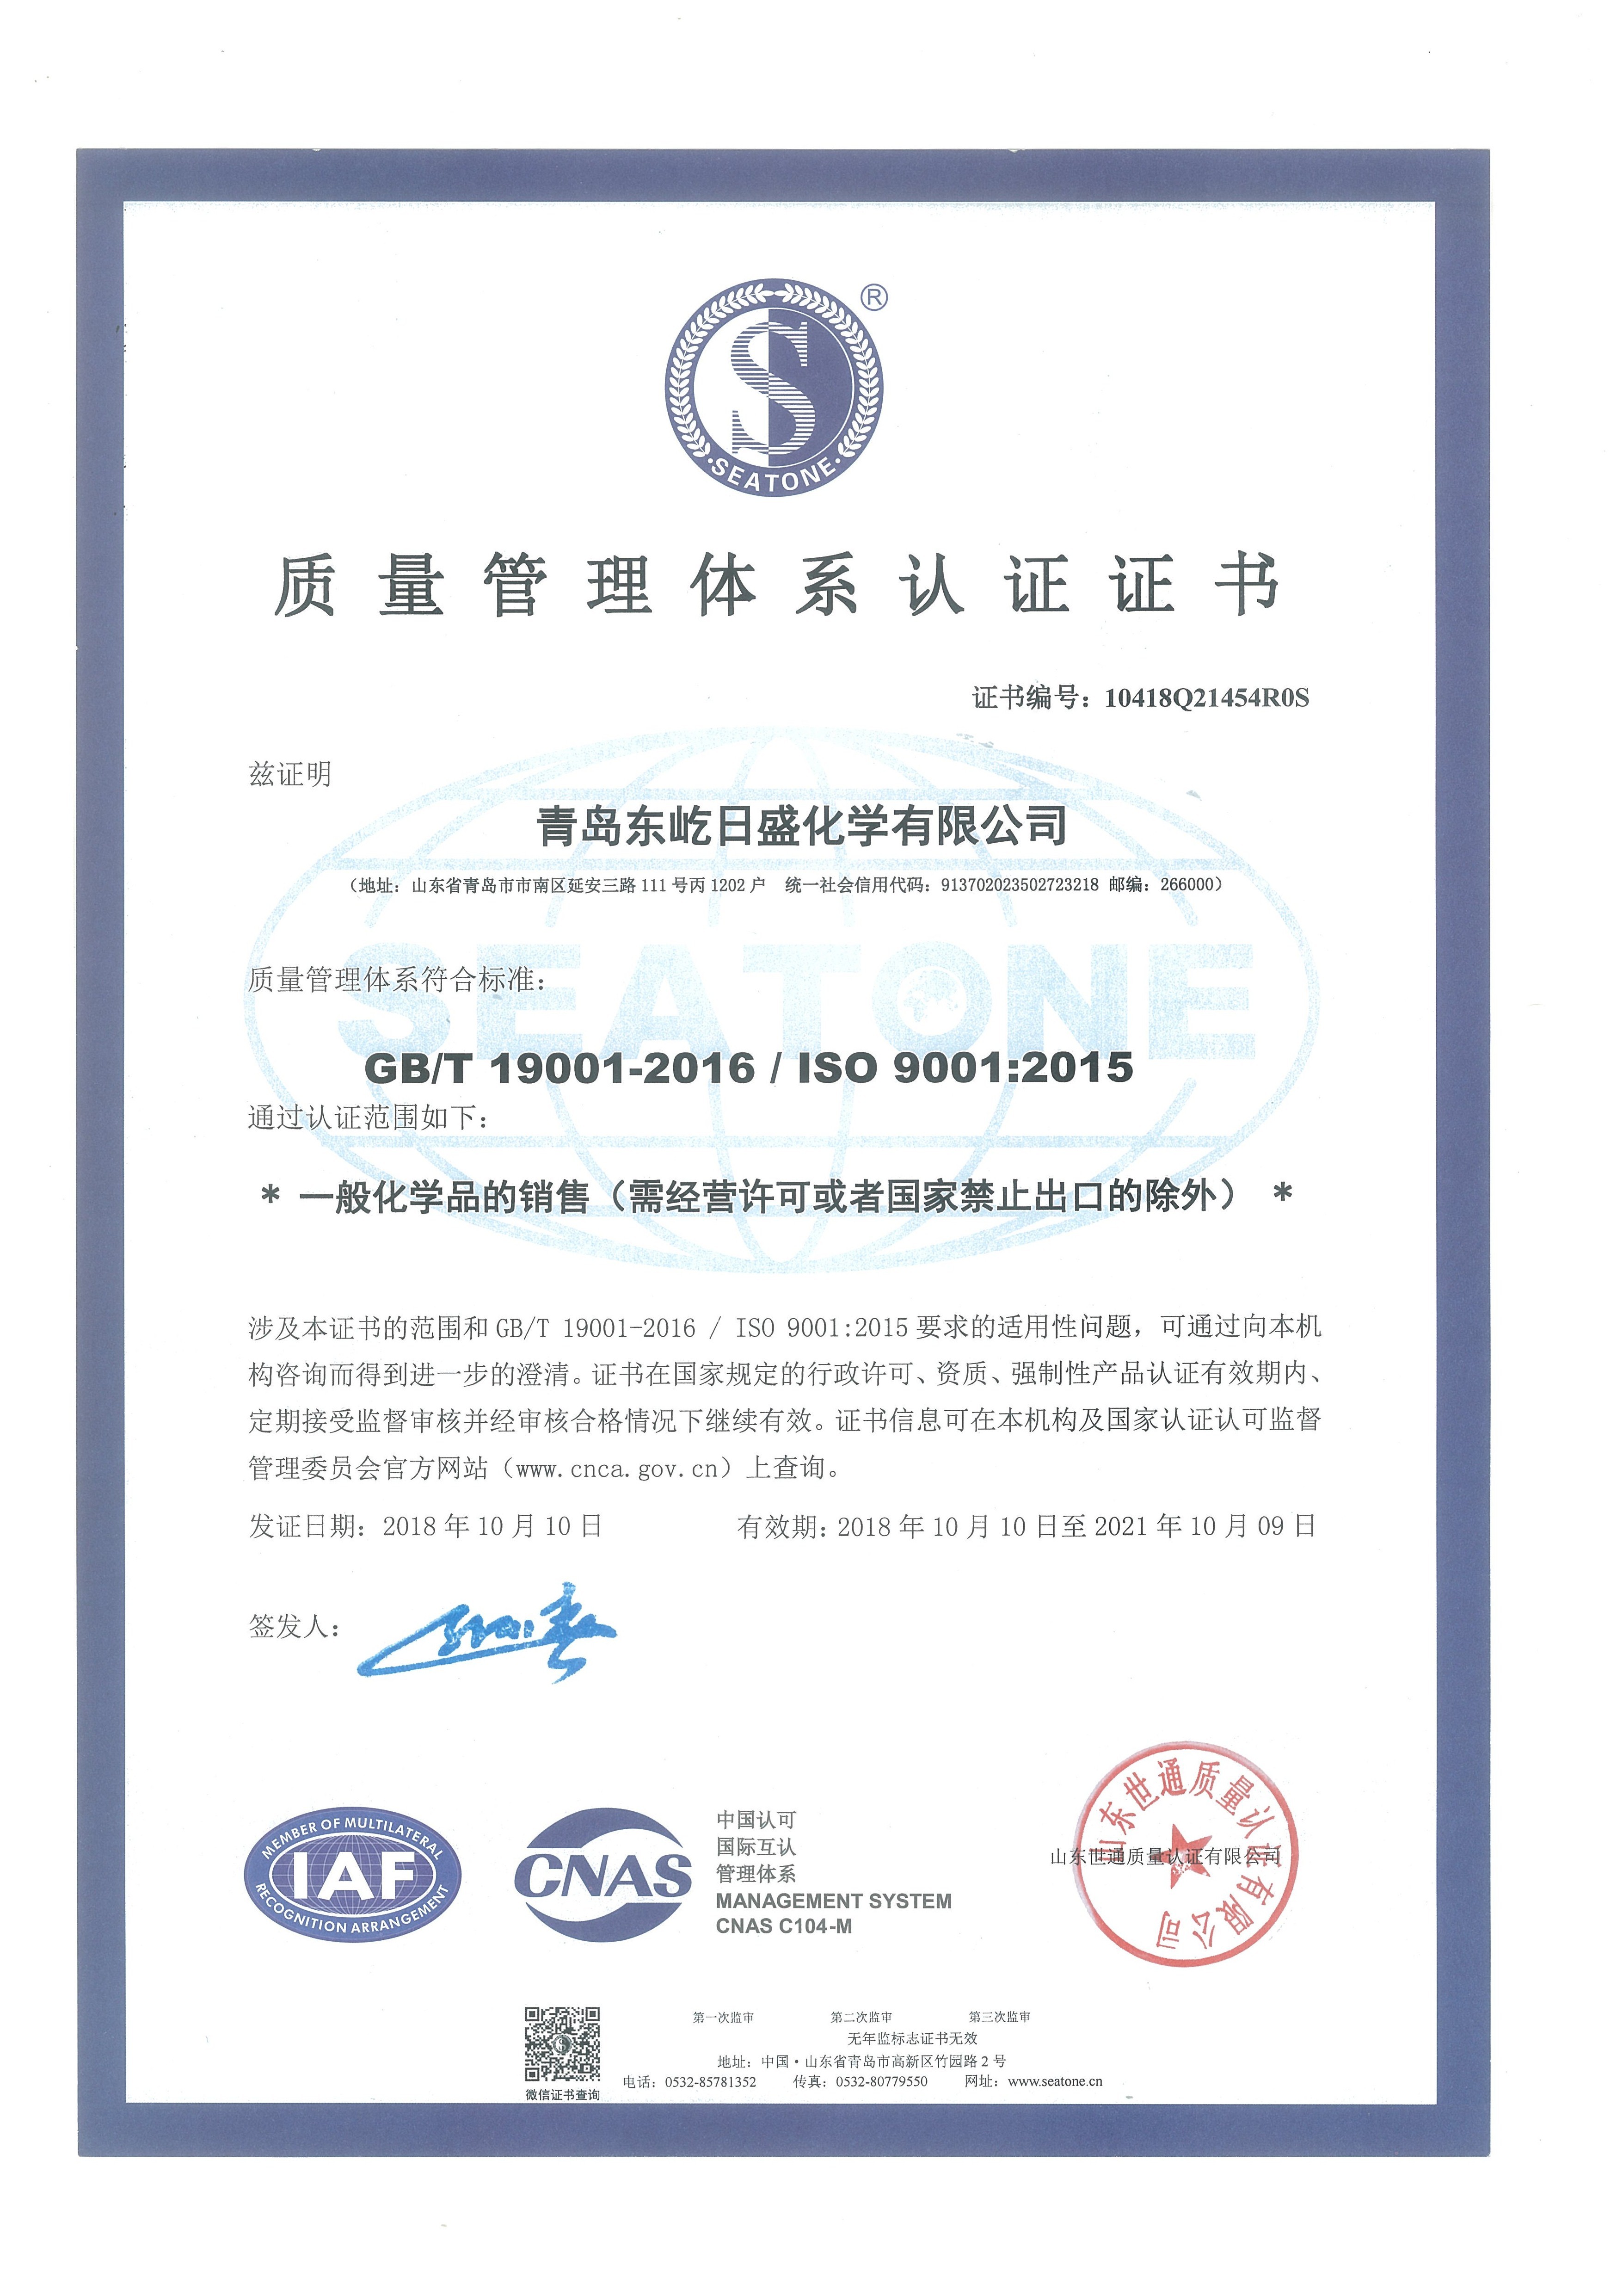 چین QINGDAO DOEAST CHEMICAL CO., LTD. گواهینامه ها